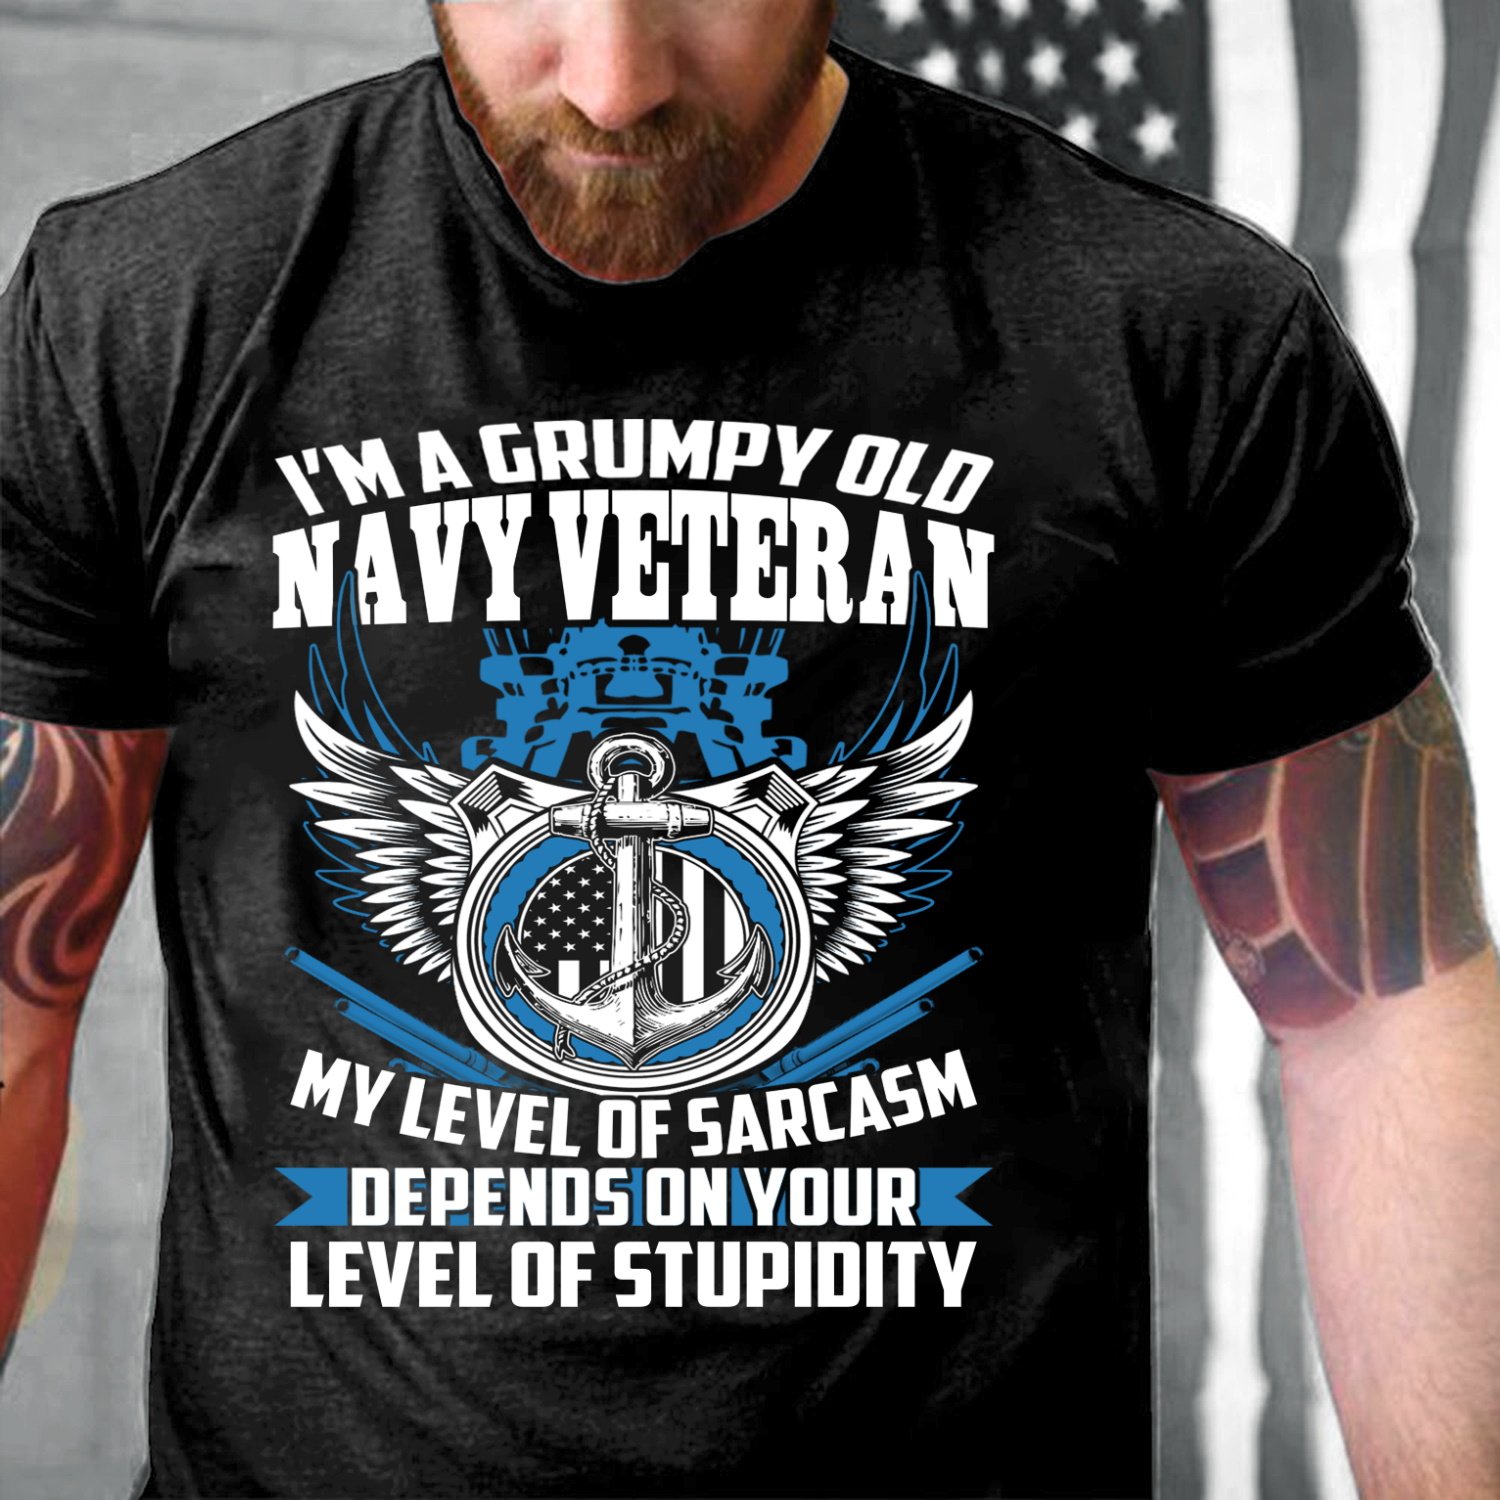 Veteran Shirt, Navy Shirt, I'm A Grumpy Old Navy Veteran, My Level Of Sarcasm T-Shirt